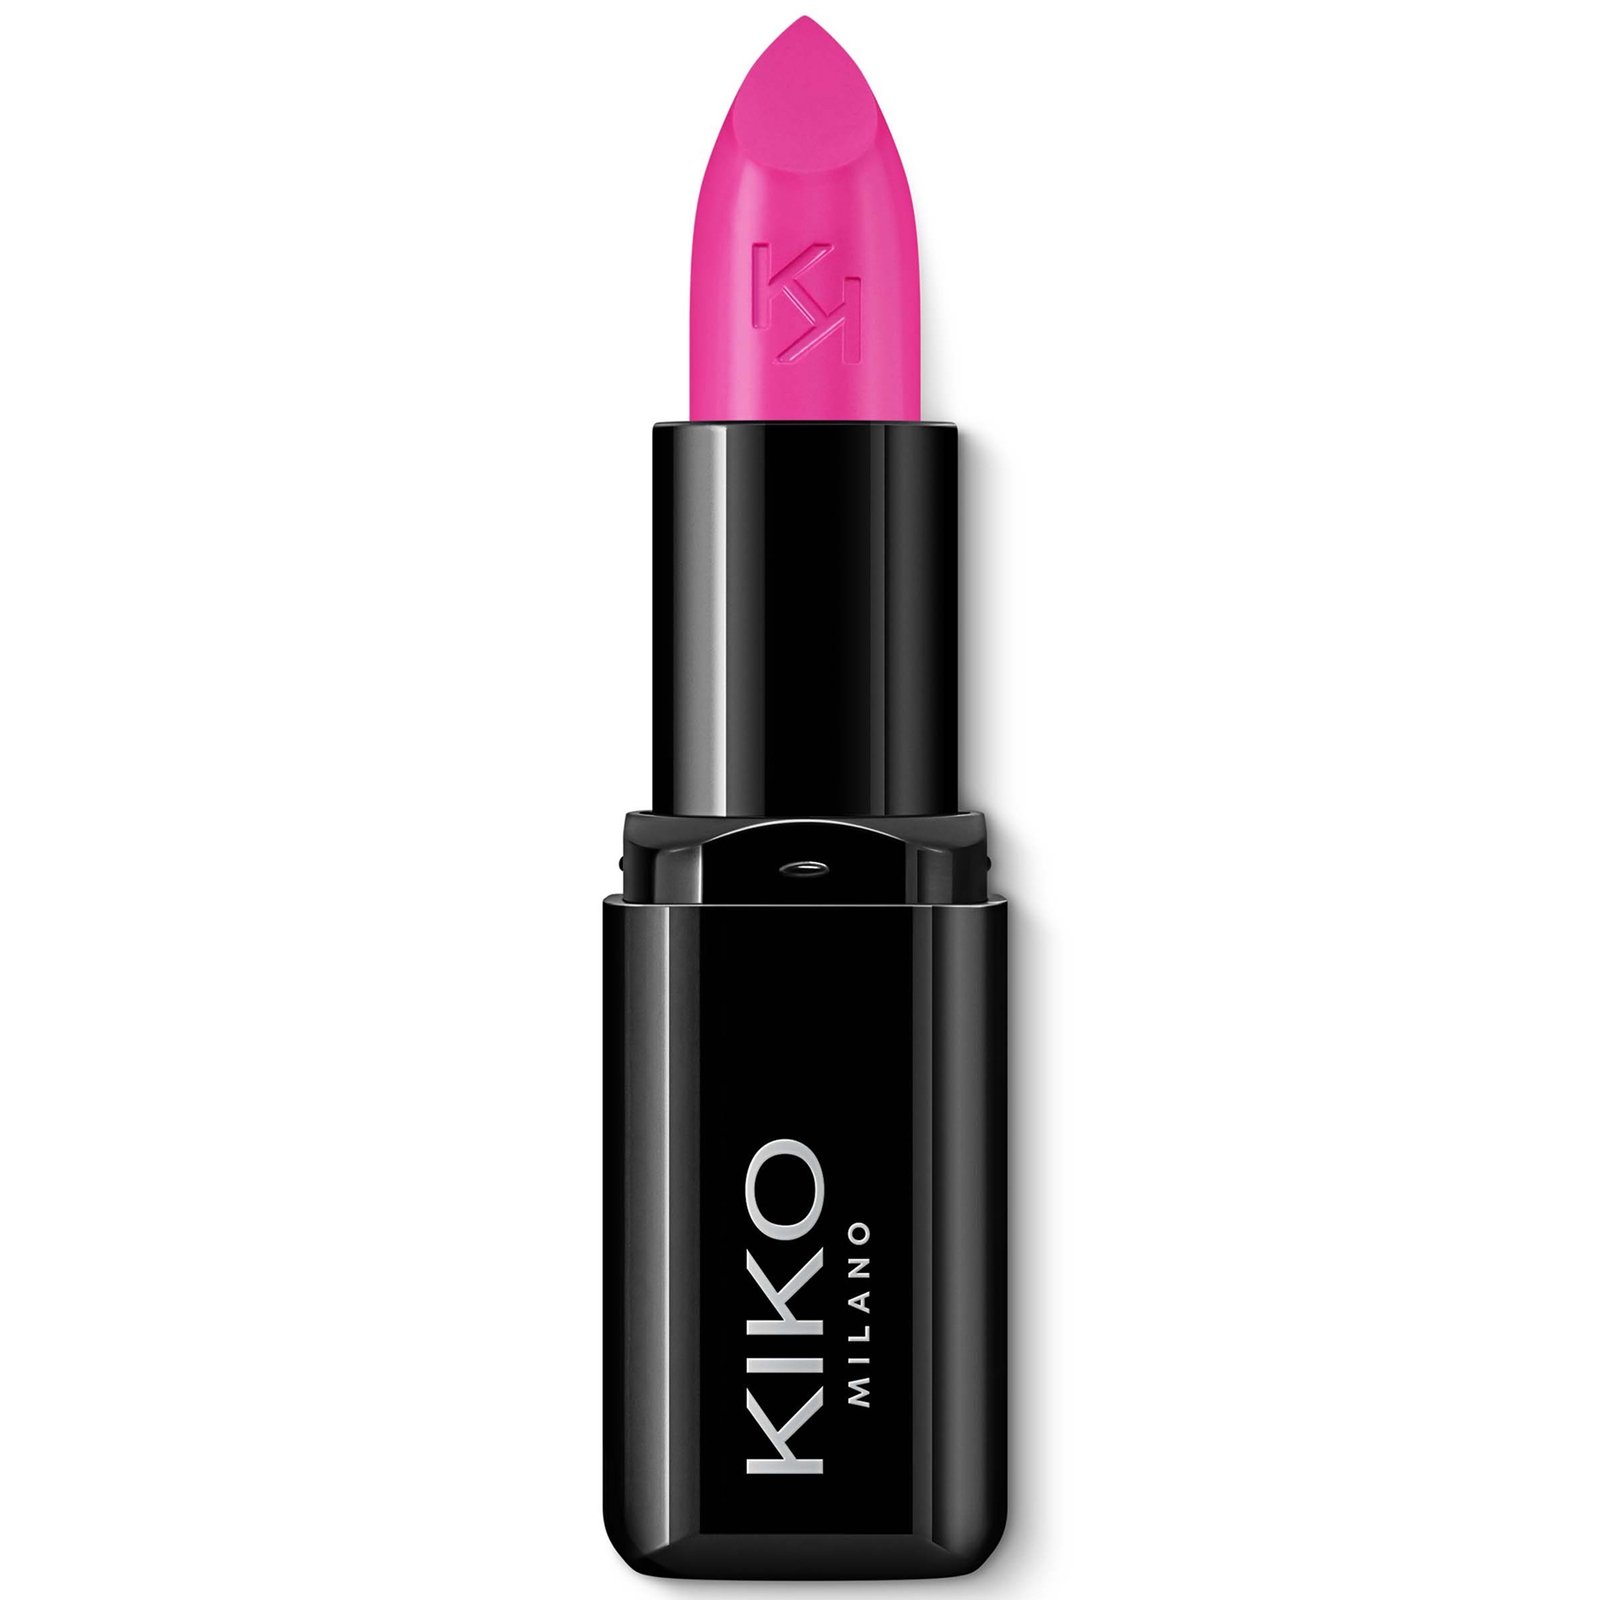 KIKO Milano Smart Fusion Lipstick 3g (Various Shades) - 421 Fuchsia